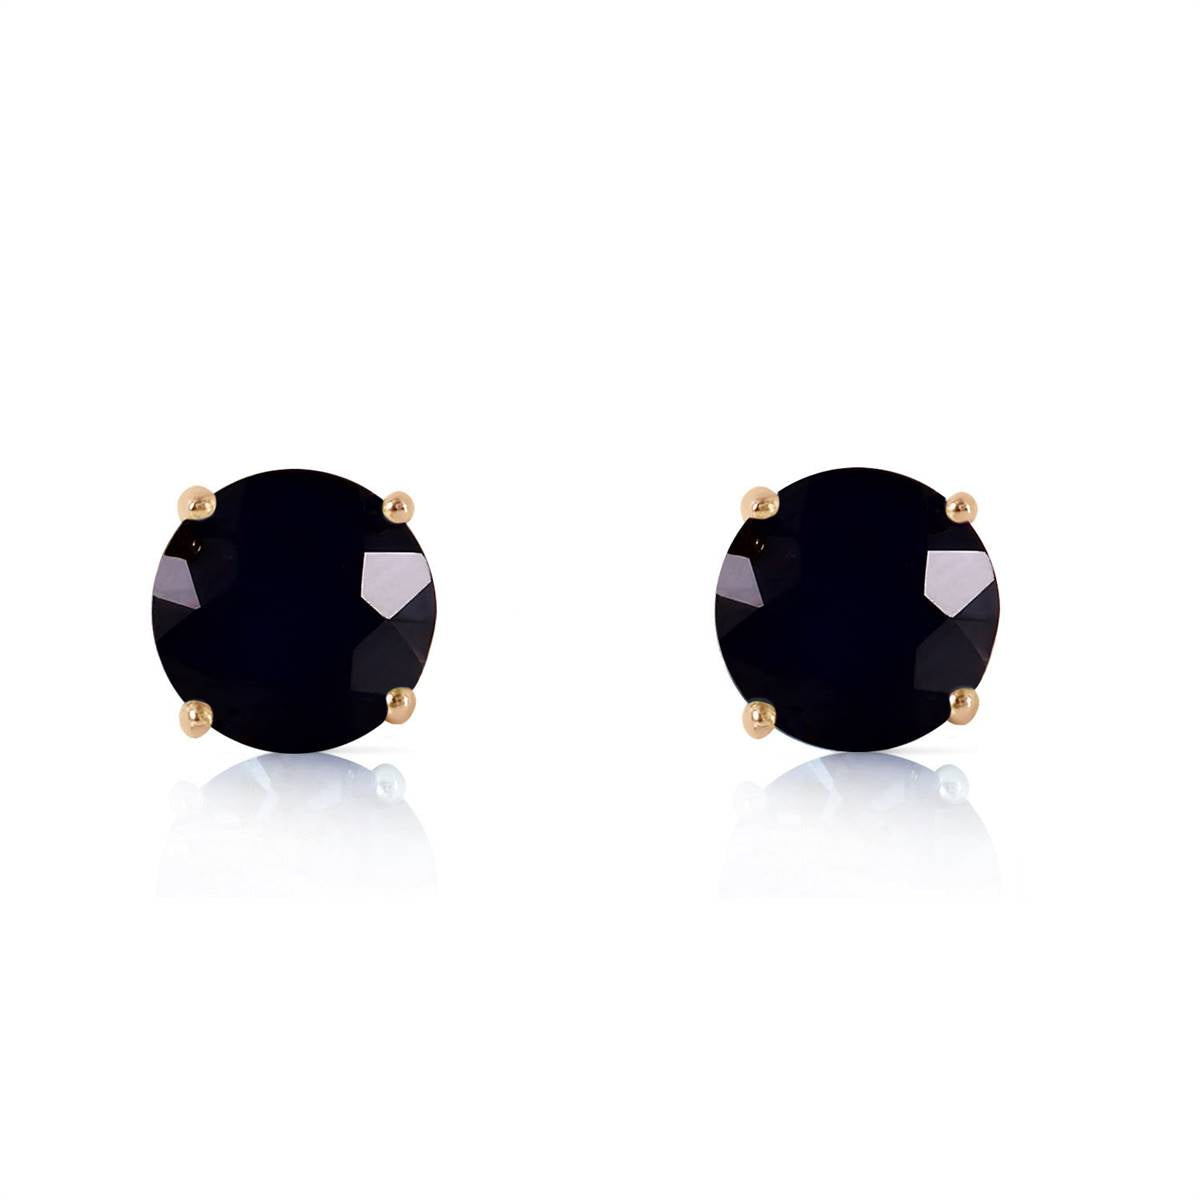 1 Carat 14K Solid Rose Gold Stud Earrings 1.0 Carat Natural Black Diamond